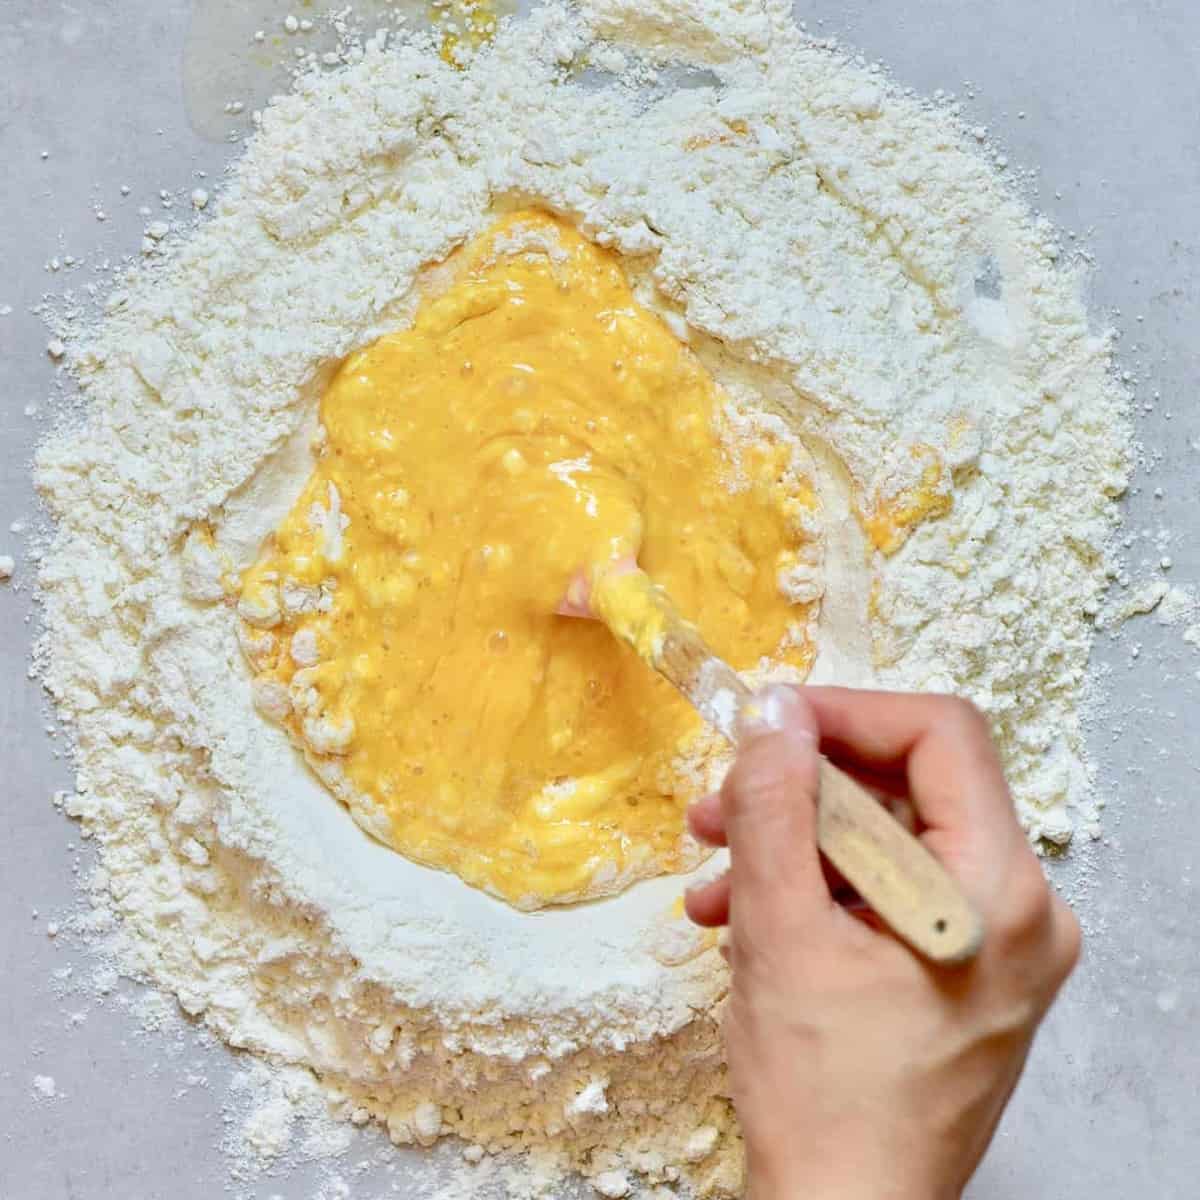 Flour and eggs for homemade pasta